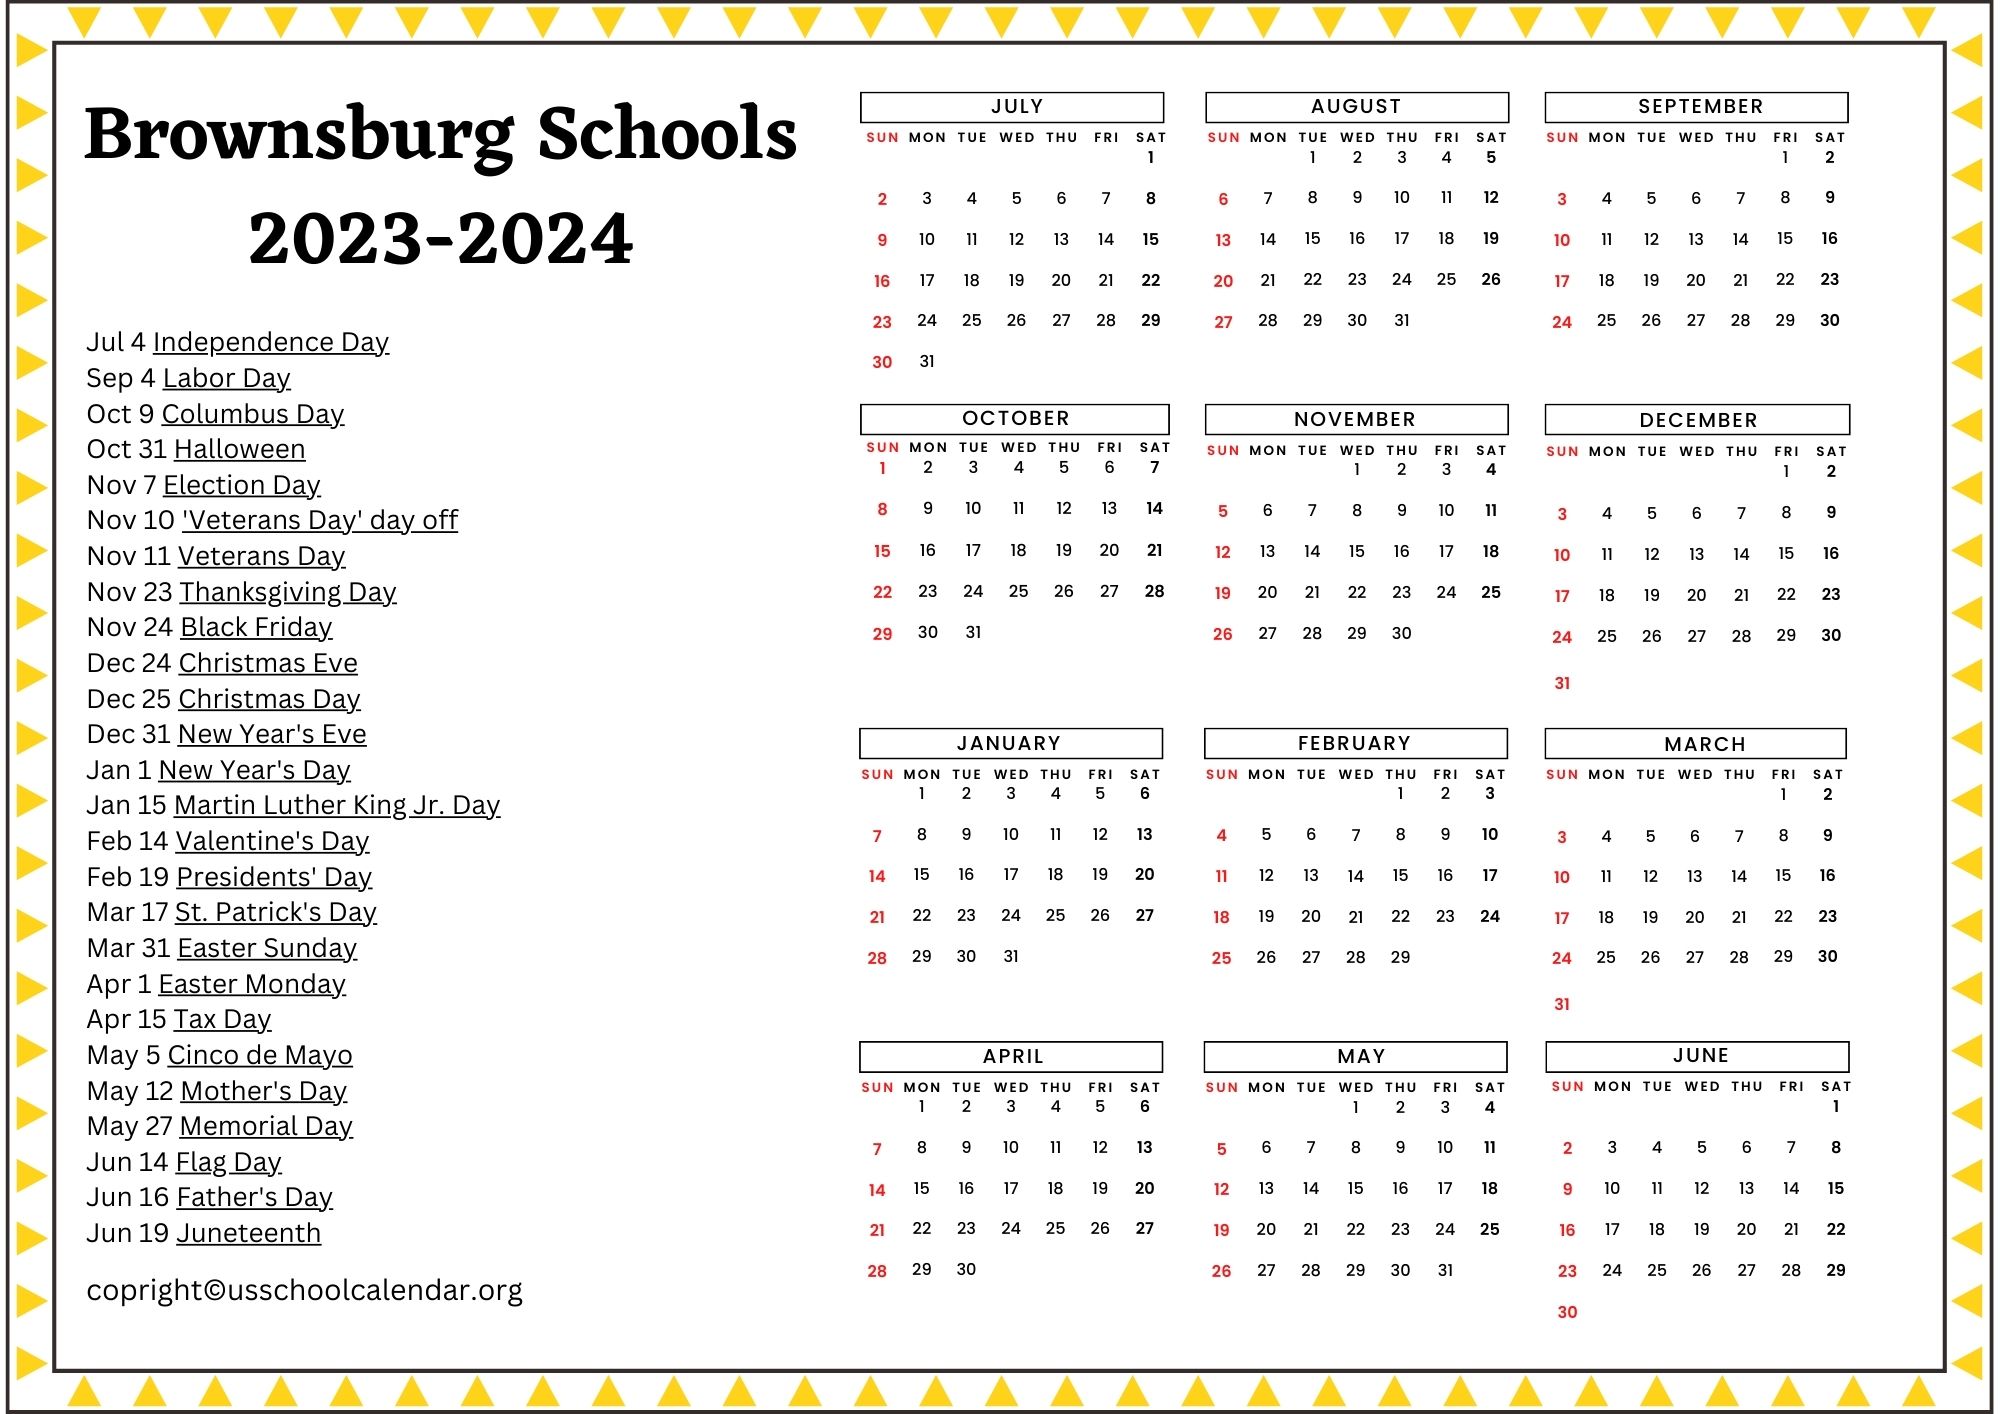 Brownsburg Schools Calendar with Holidays 2023 2024